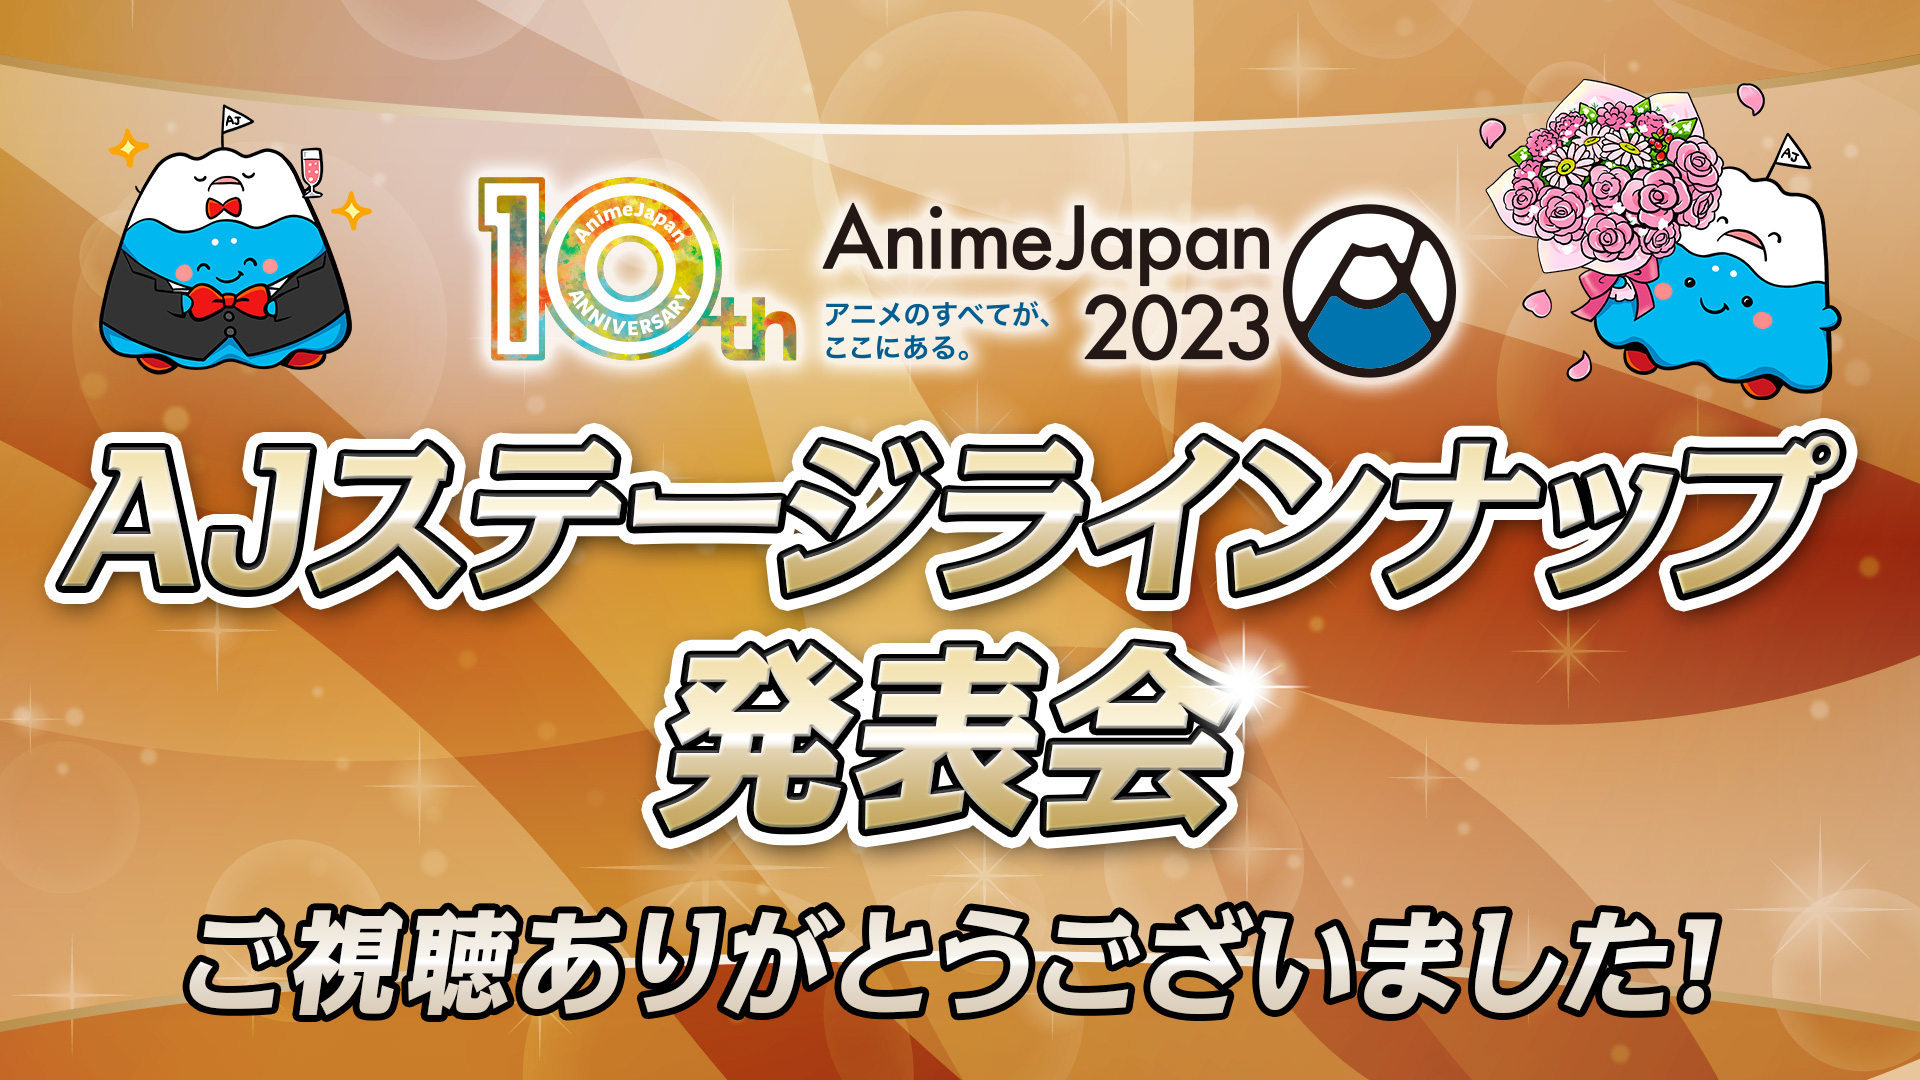 AnimeJapan 2023 header